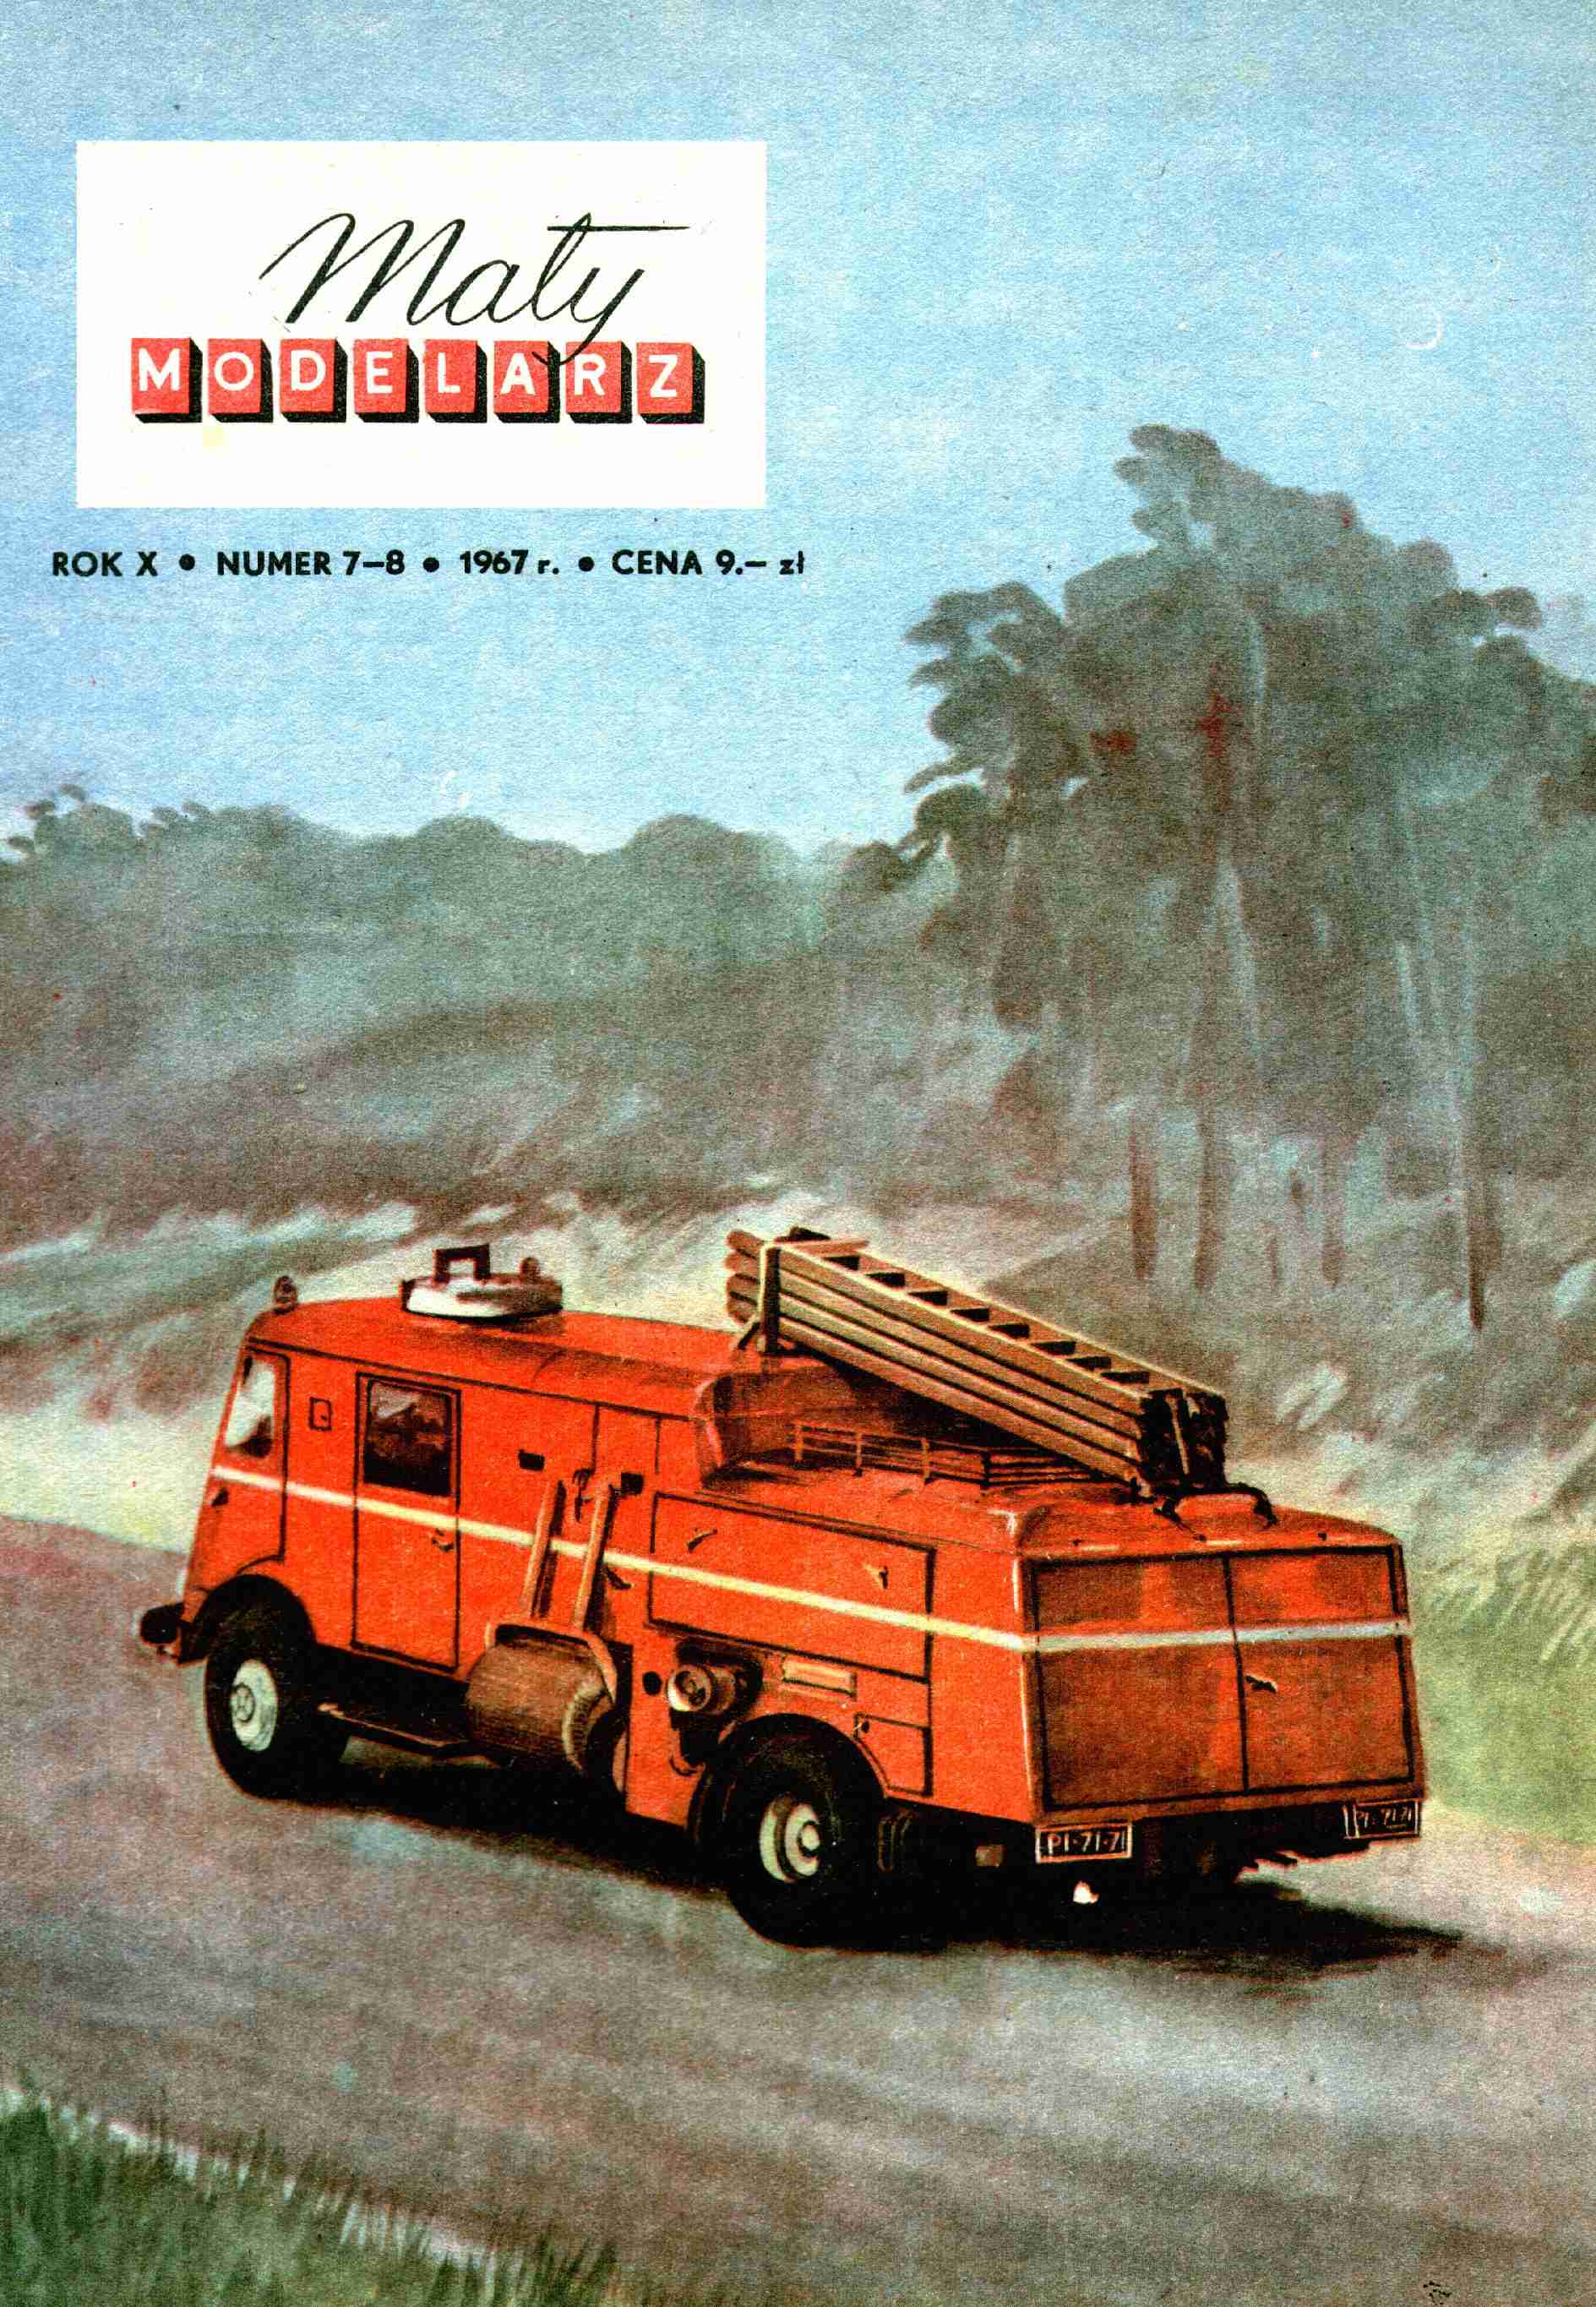 "Maly Modelarz" 7-8, 1967